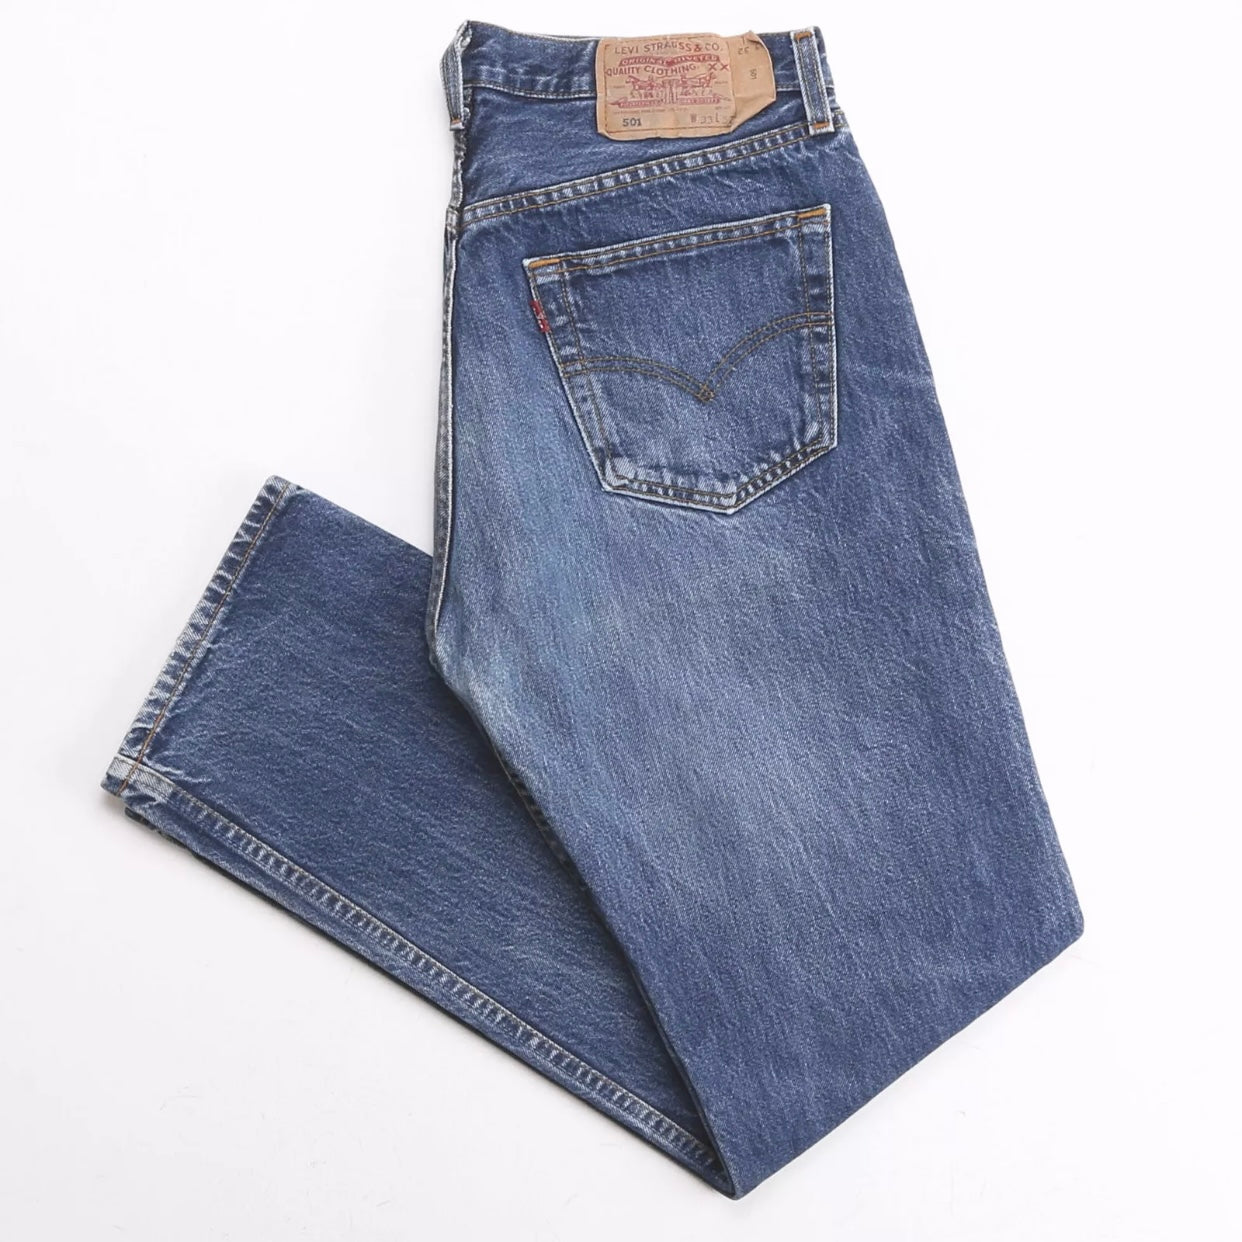 Vintage Levi’s 501’s - Mid blue wash waist 33 Leg 32